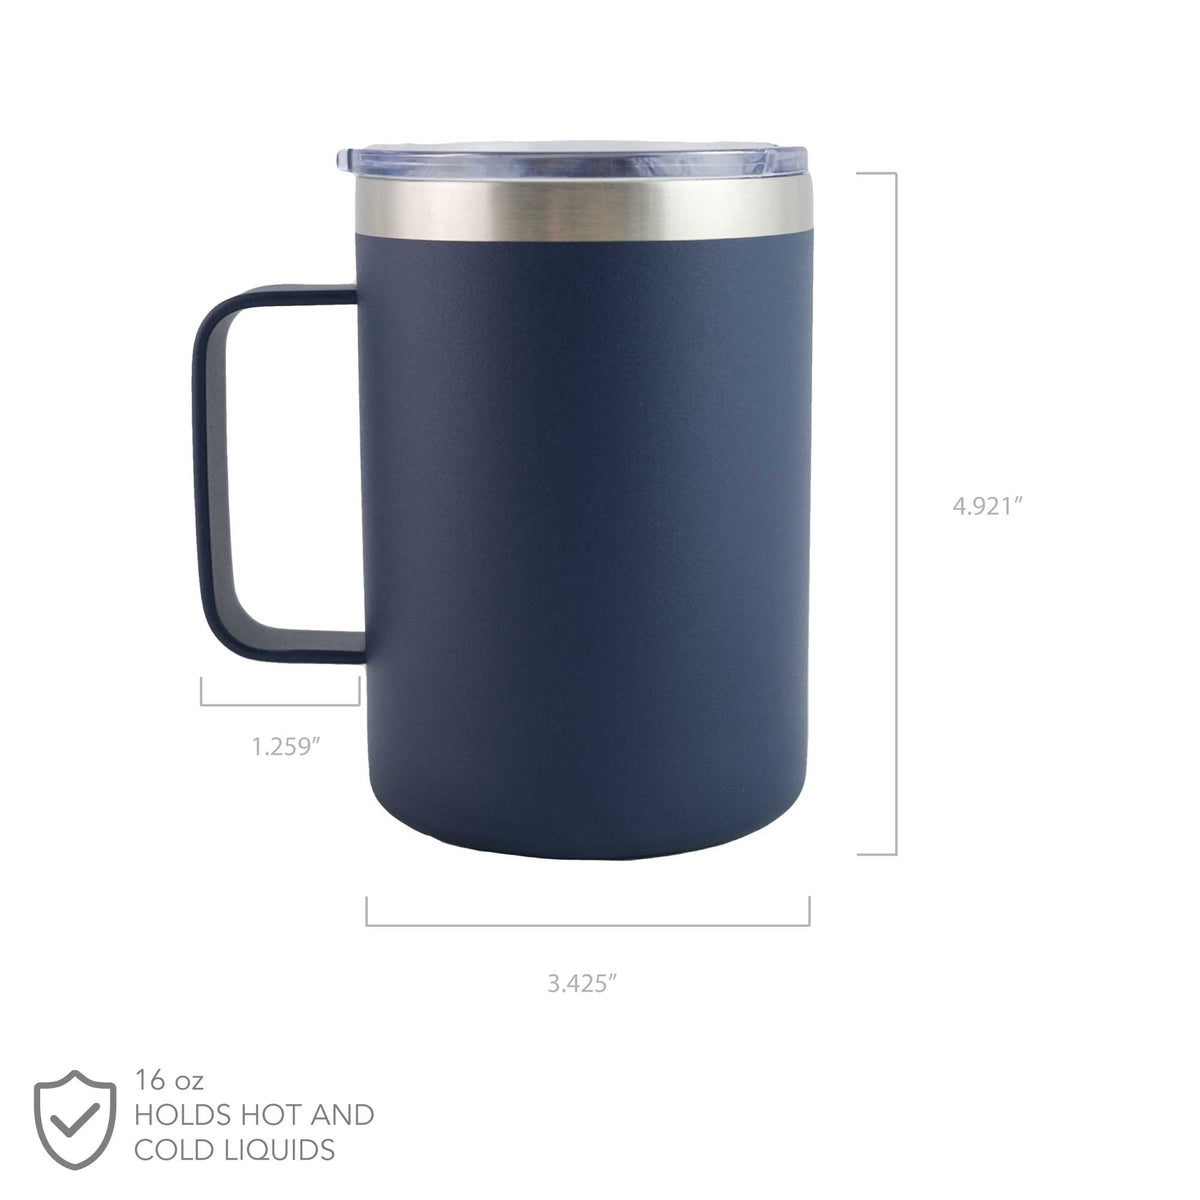 16 oz. Stainless Steel Travel Mug w/ handle